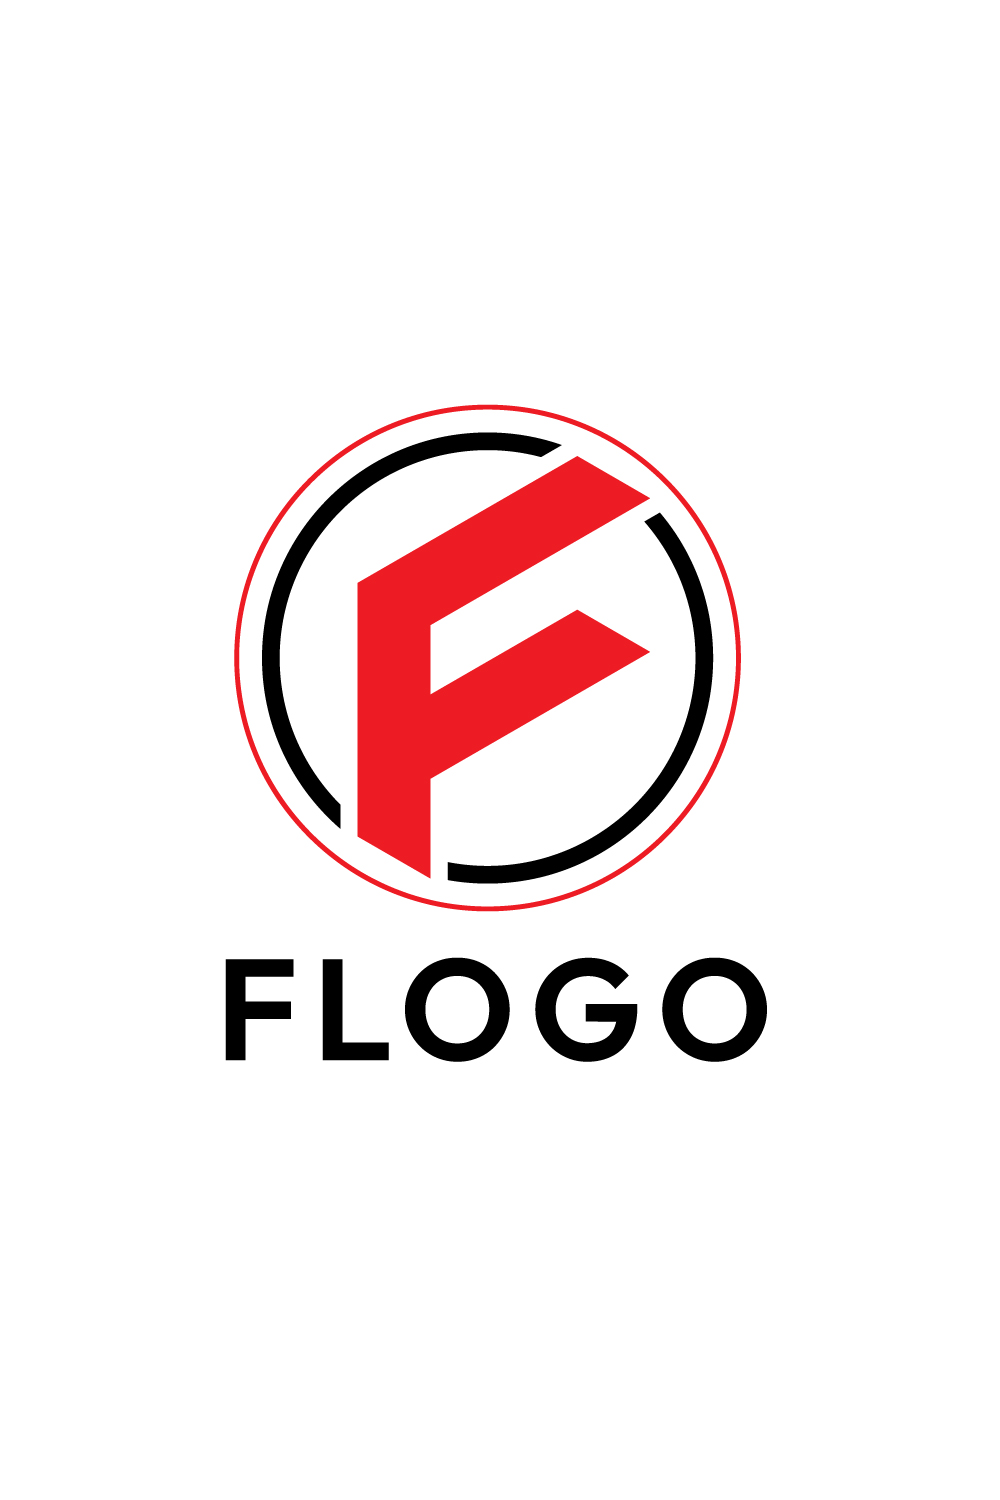 F Logo Design Bundle: Elevate Your Brand with Versatile Focused Designs pinterest preview image.